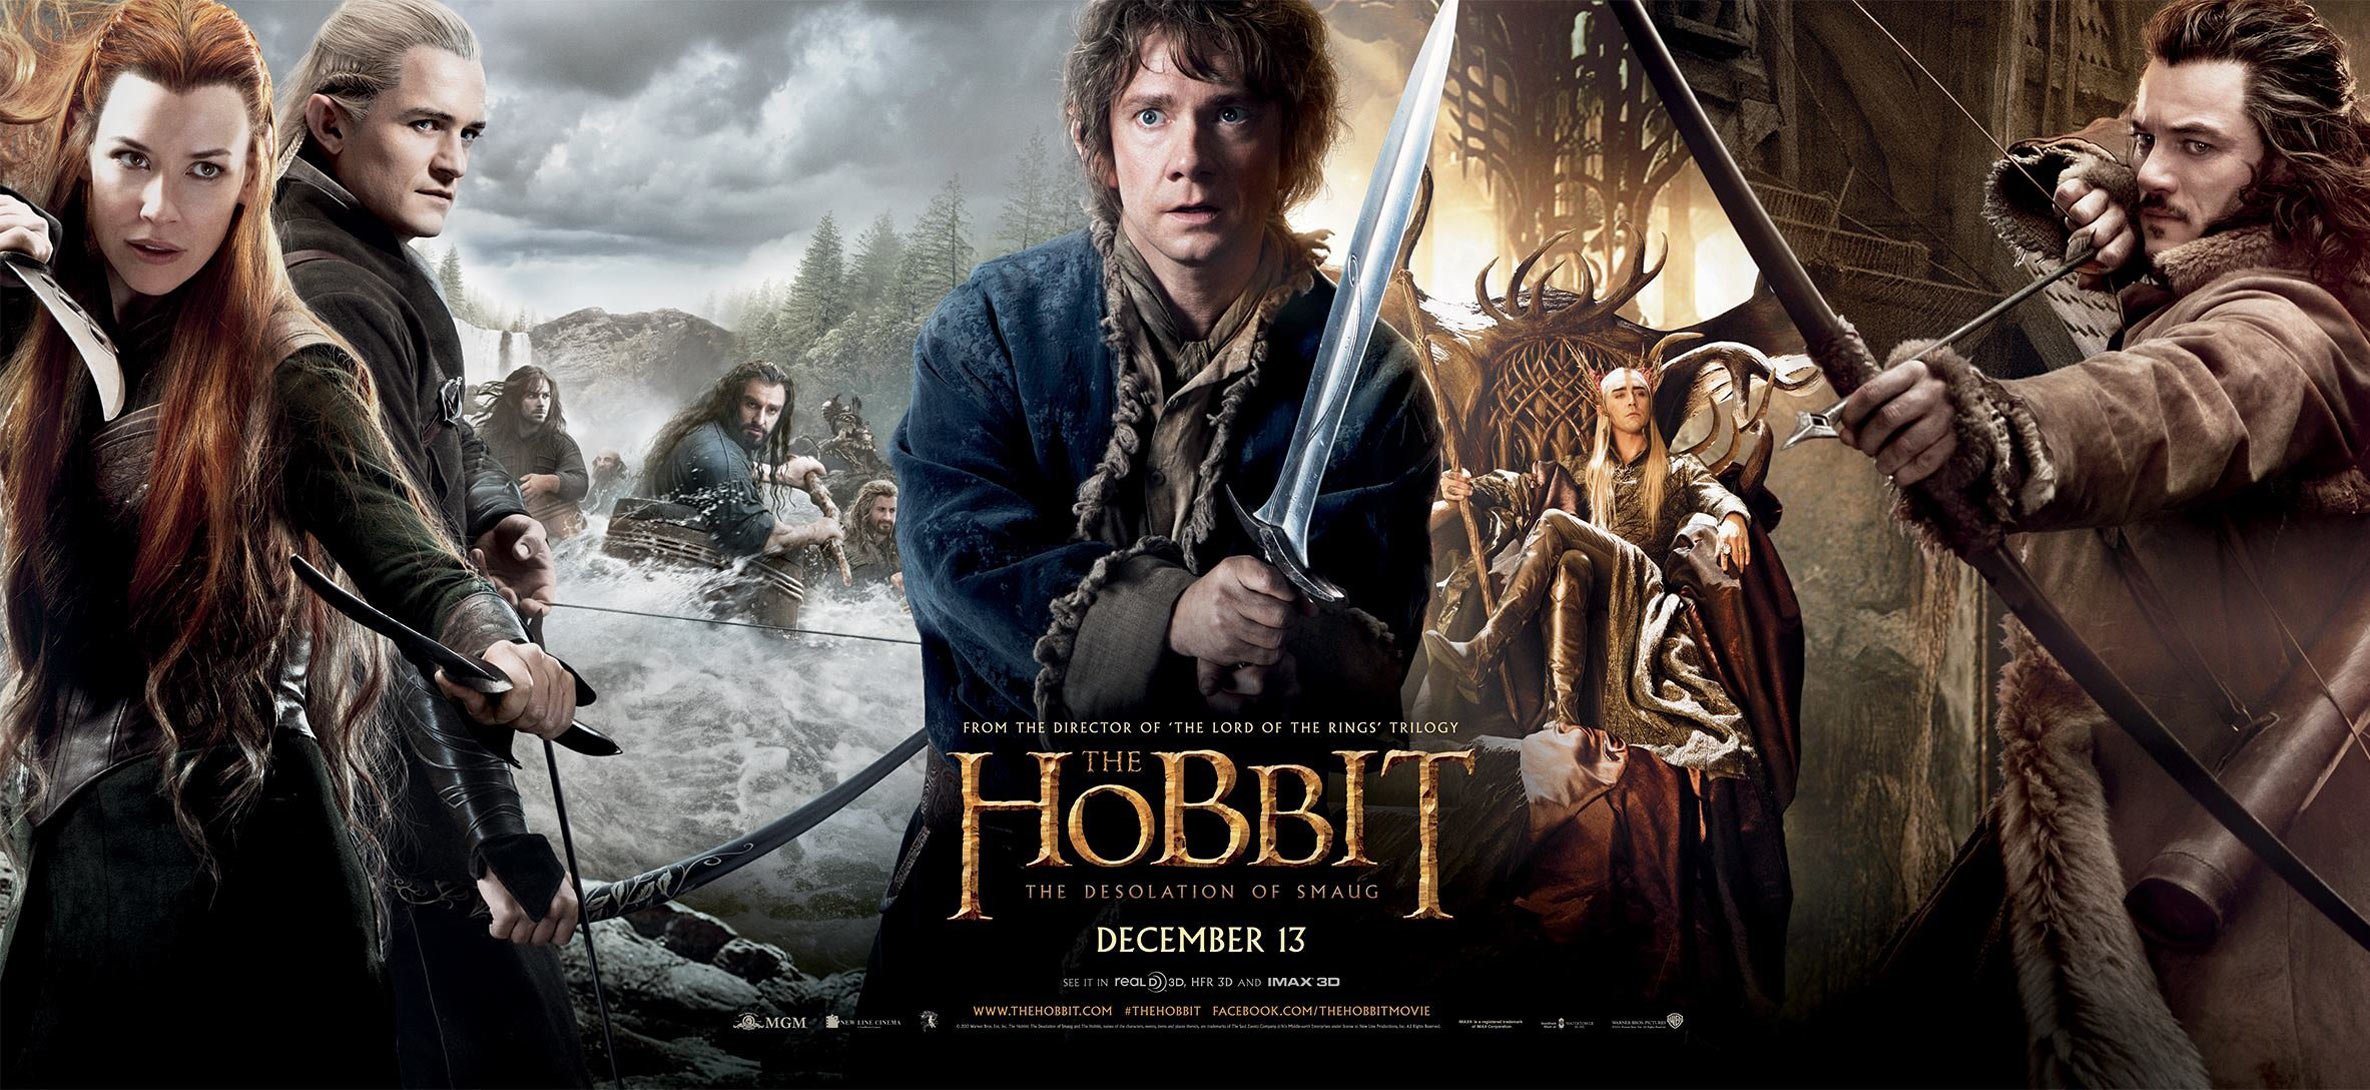 hobbit, Desolation, Smaug, Lotr, Lord, Rings, Adventure, Fantasy Wallpaper